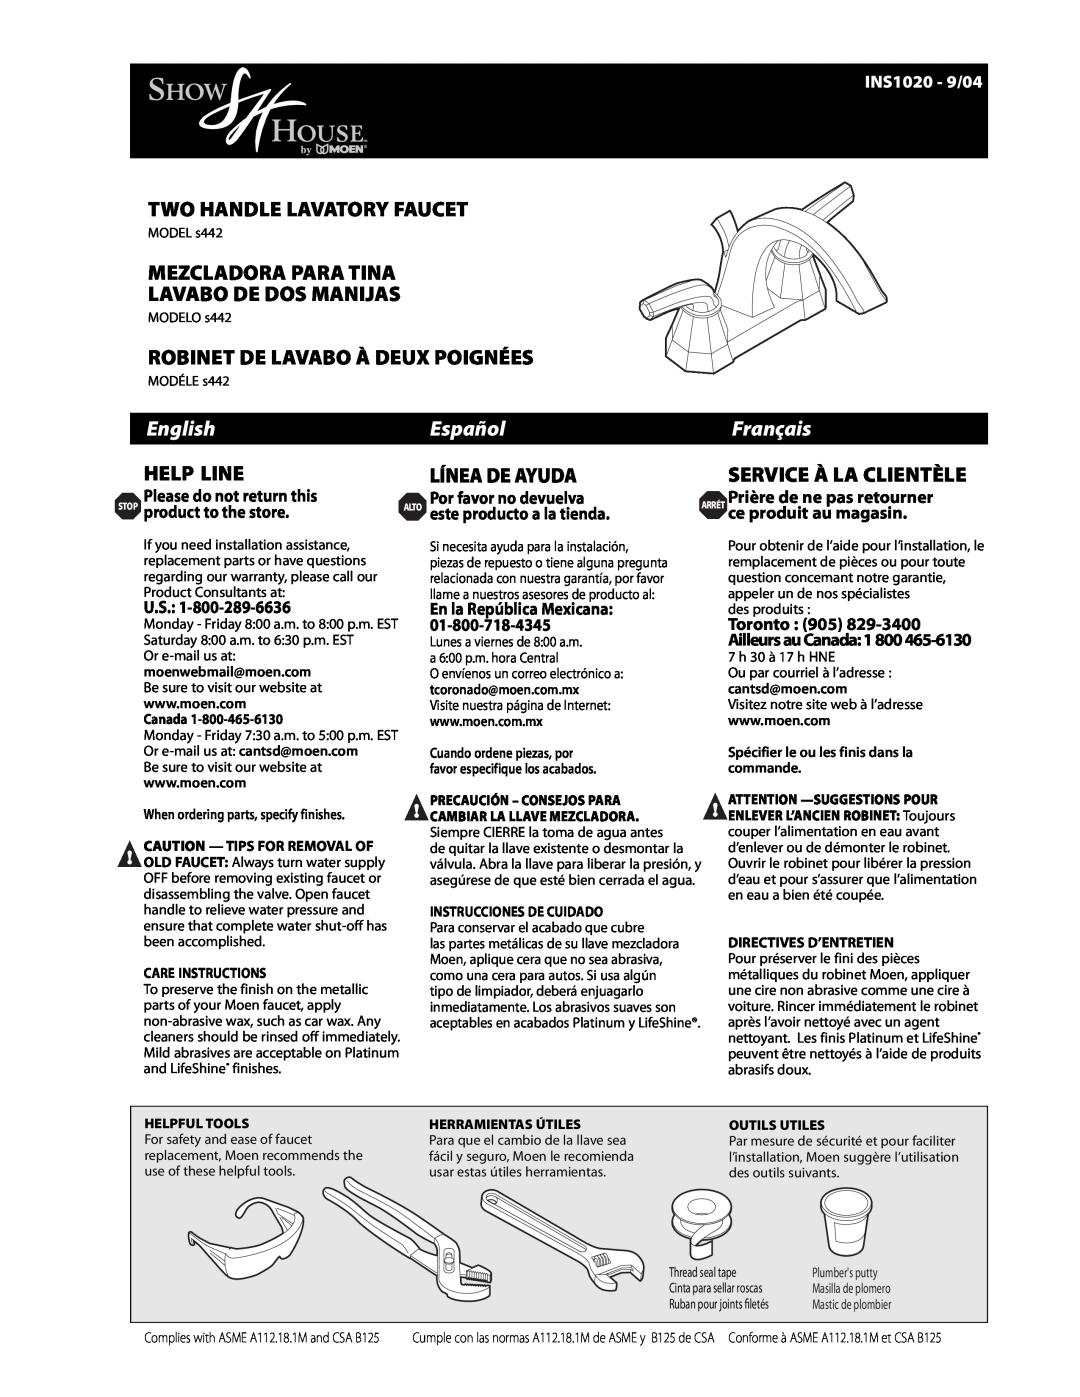 Moen s442 warranty English, Español, Français, INS1020 - 9/04, Two Handle Lavatory Faucet, Help Line, Línea De Ayuda 